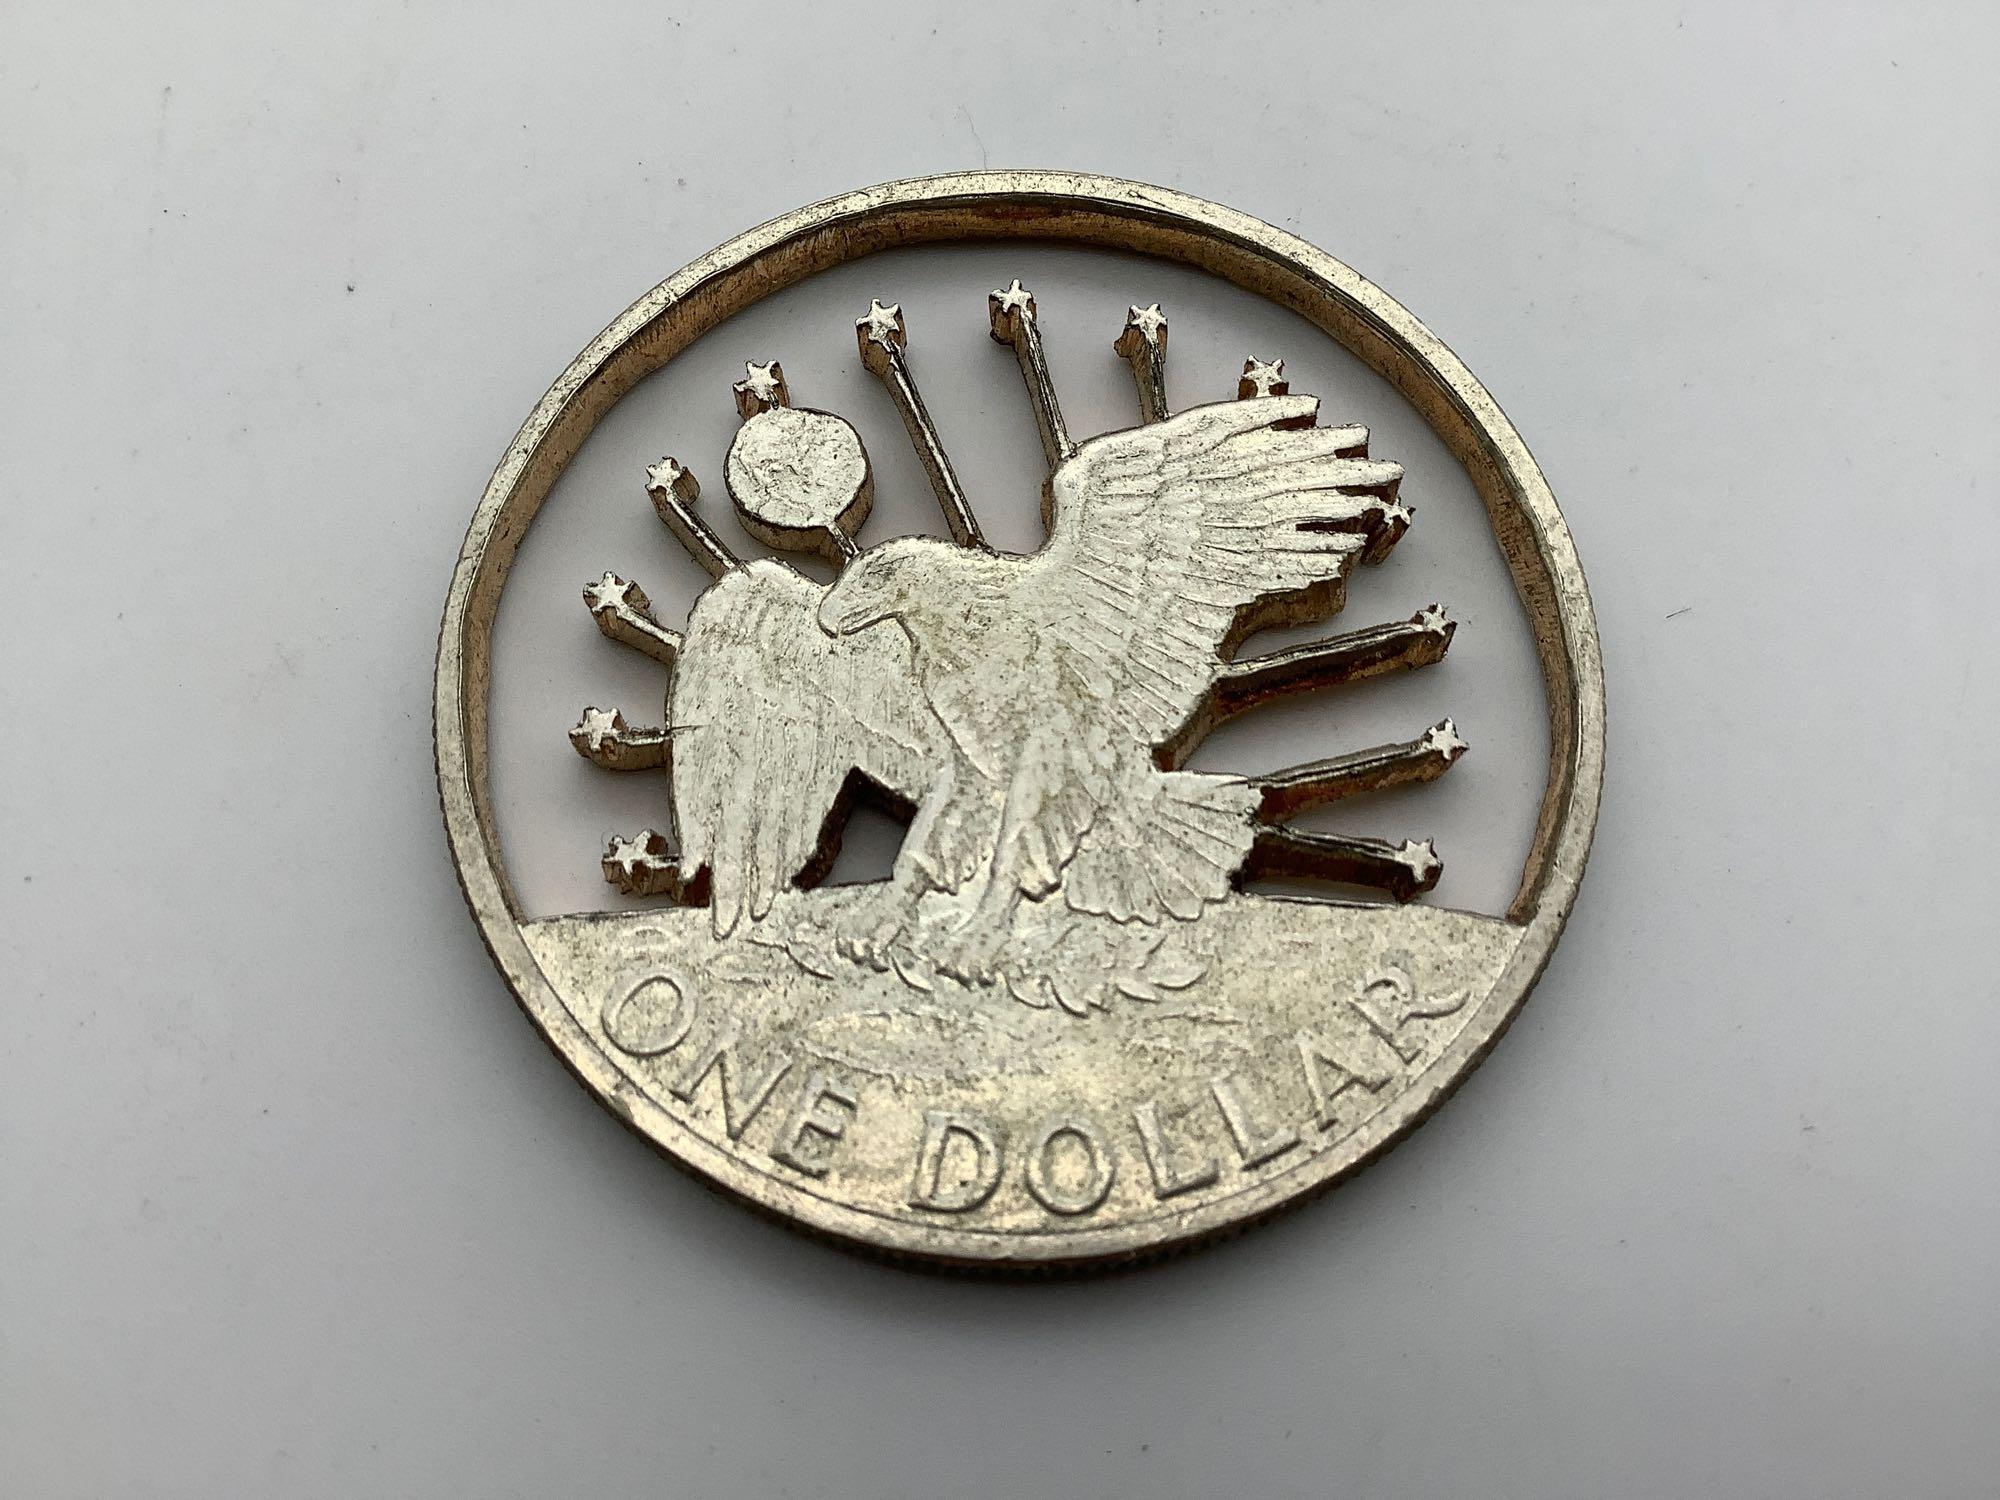 1977 Mini Mint coin set 3 laser cut coins 1965 Kennedy/ Buffalo nickel/1942 silver florin bottle cap